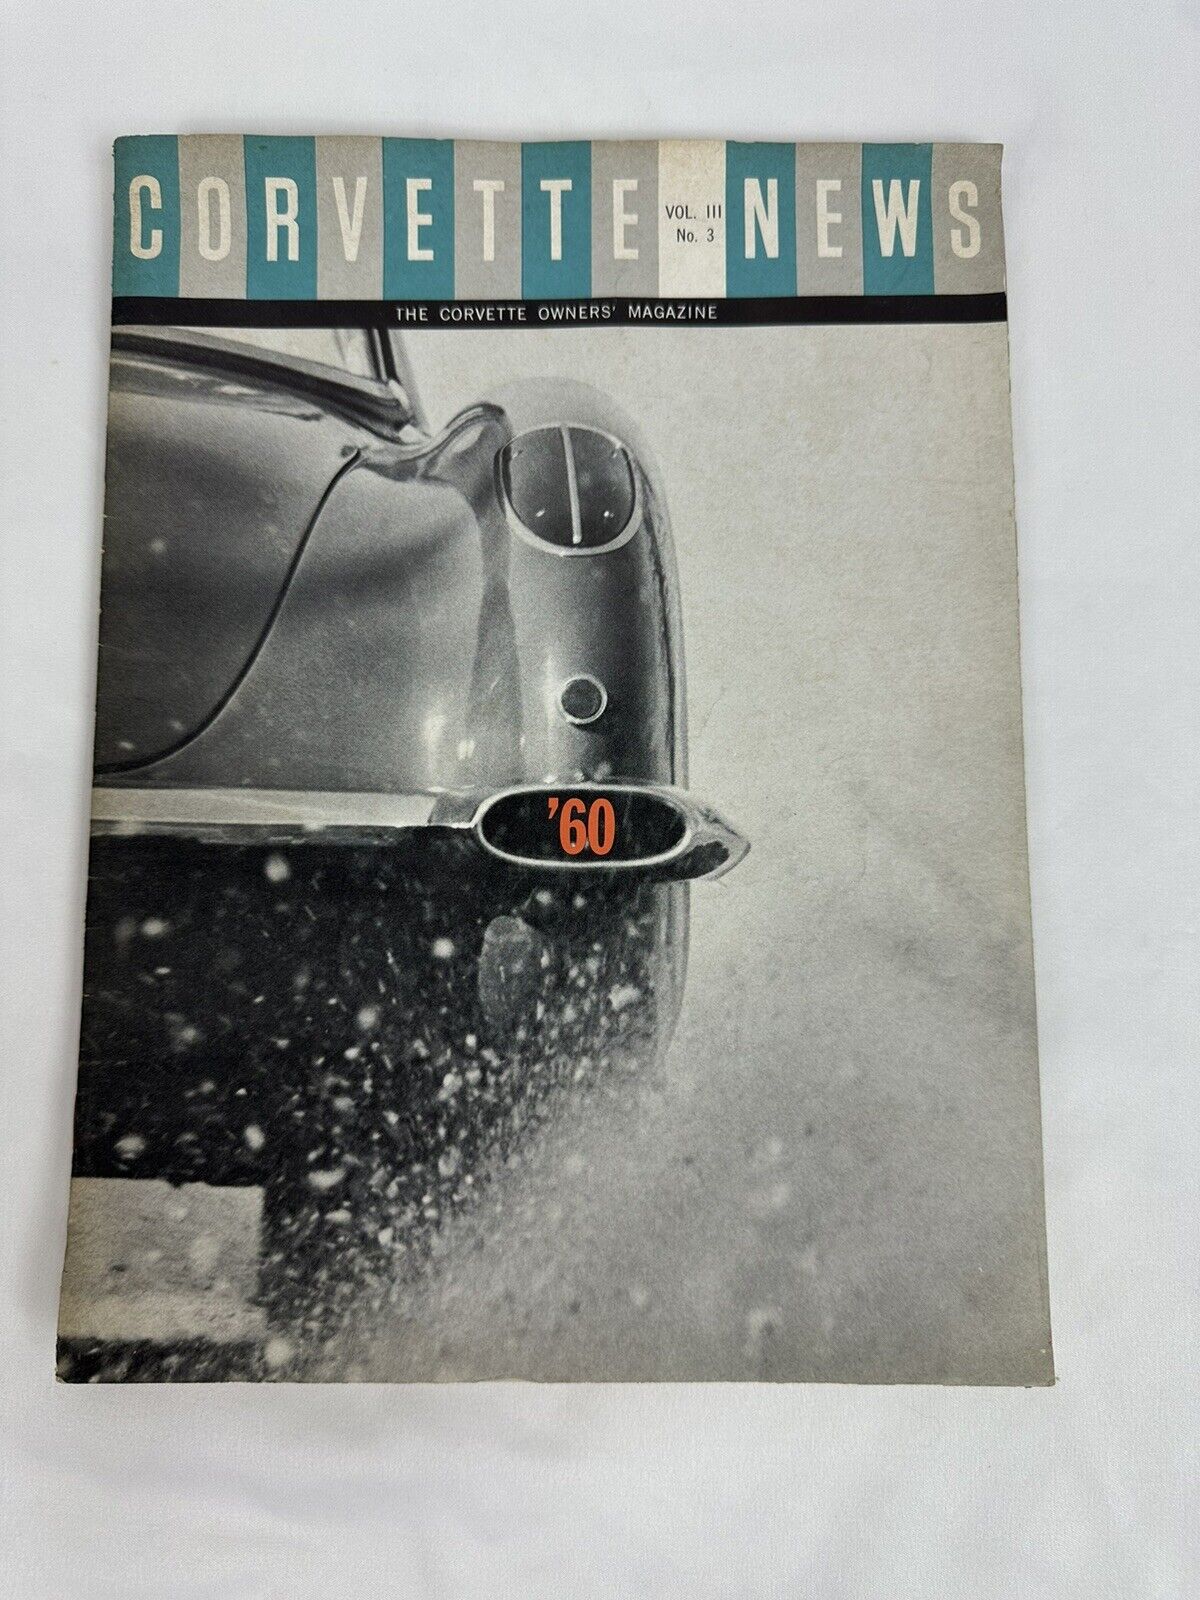 Corvette News Vol. III No. 3 (Volume 3 Number 3) - 1959